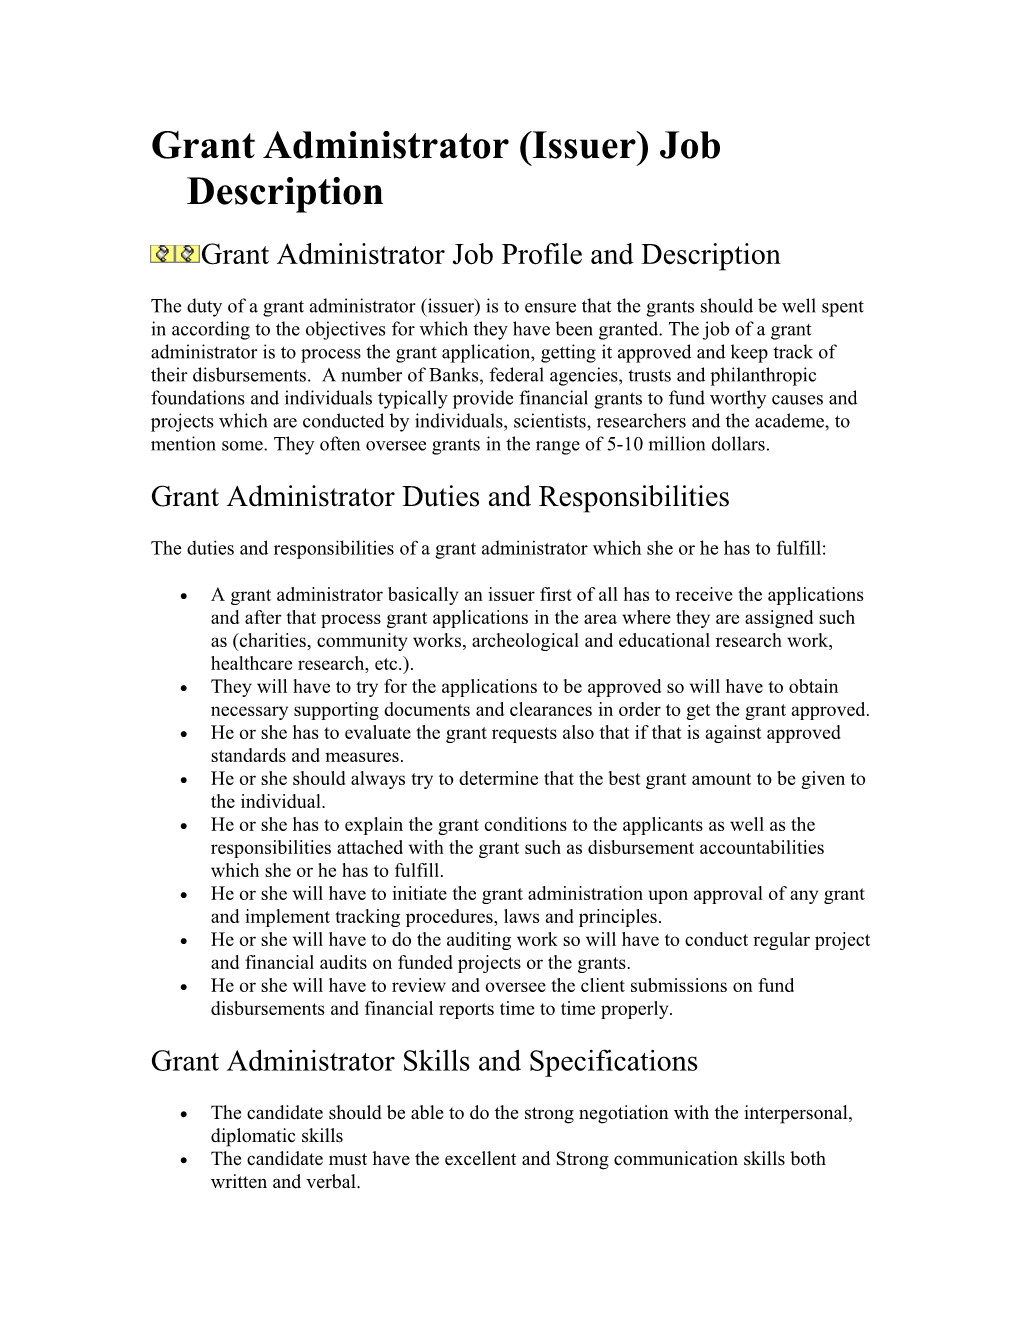 Grant Administrator (Issuer) Job Description